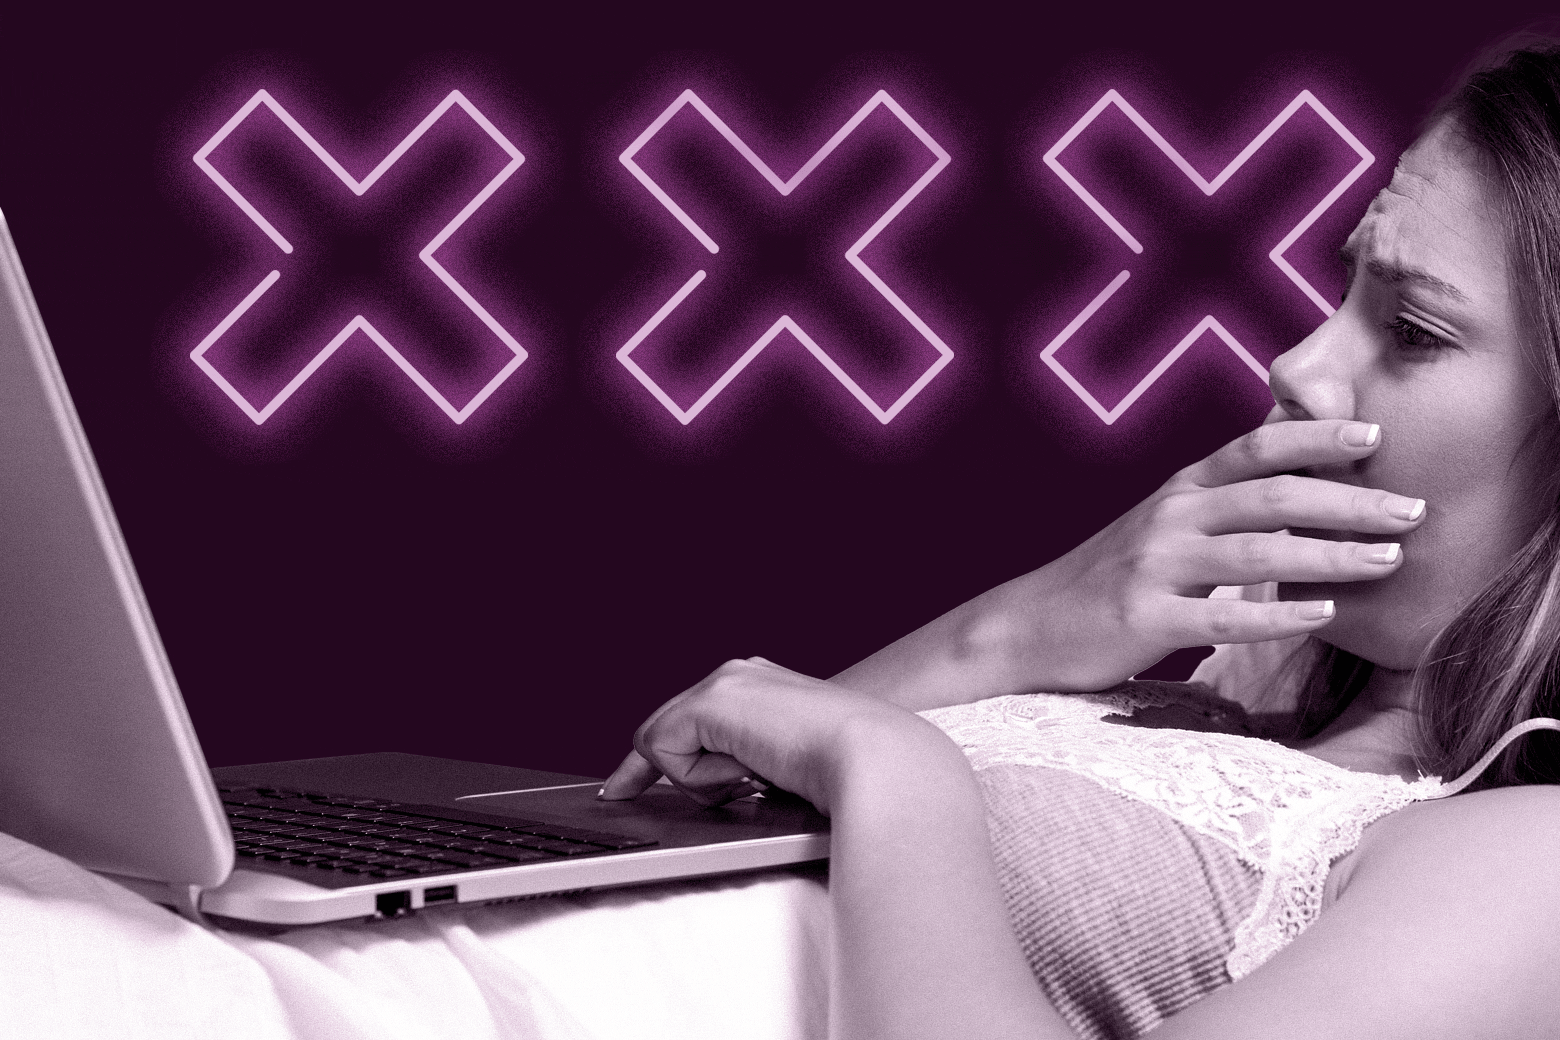 Sex advice: I discovered my husband's secret social media account